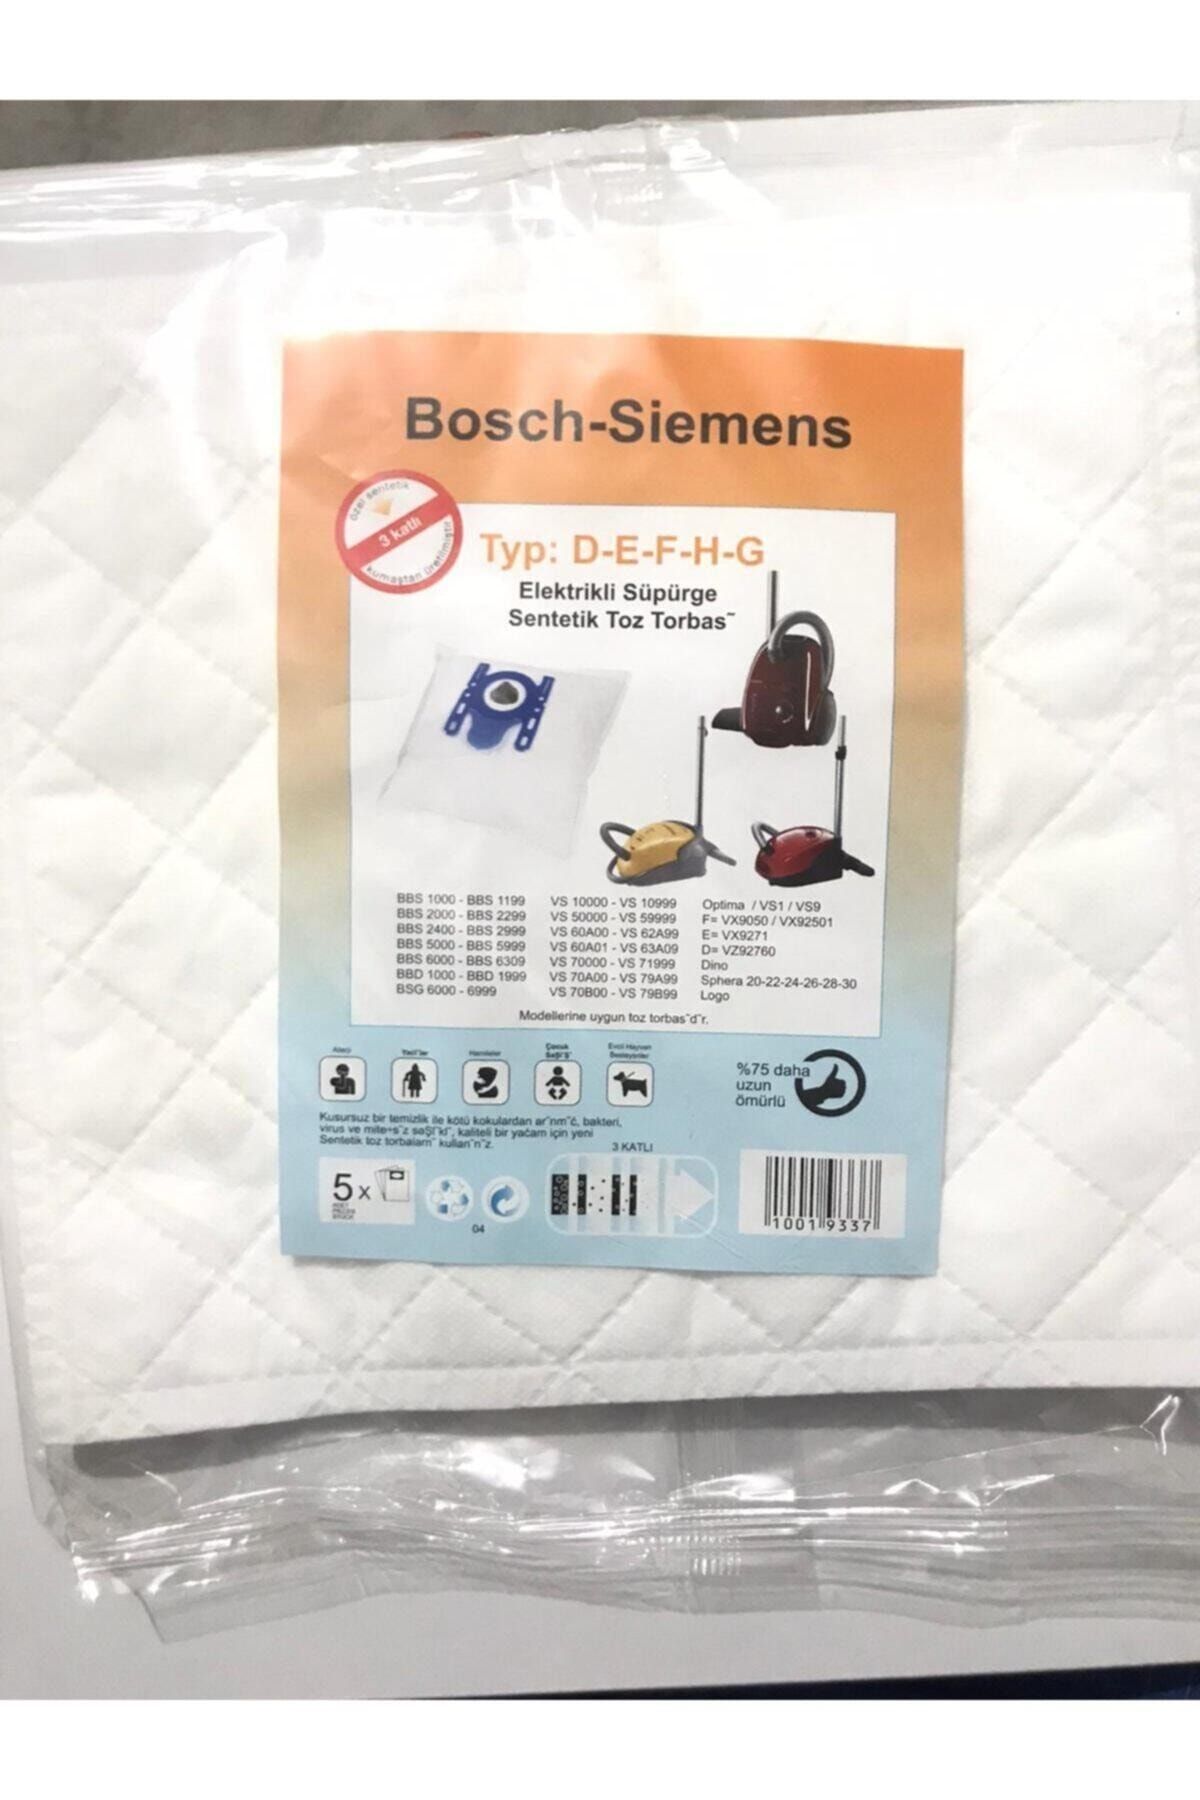 Bosch - Siemens 5 Adetantimikrobiyal Toz Torbası Typ D-e-f-h-g Uyumlu